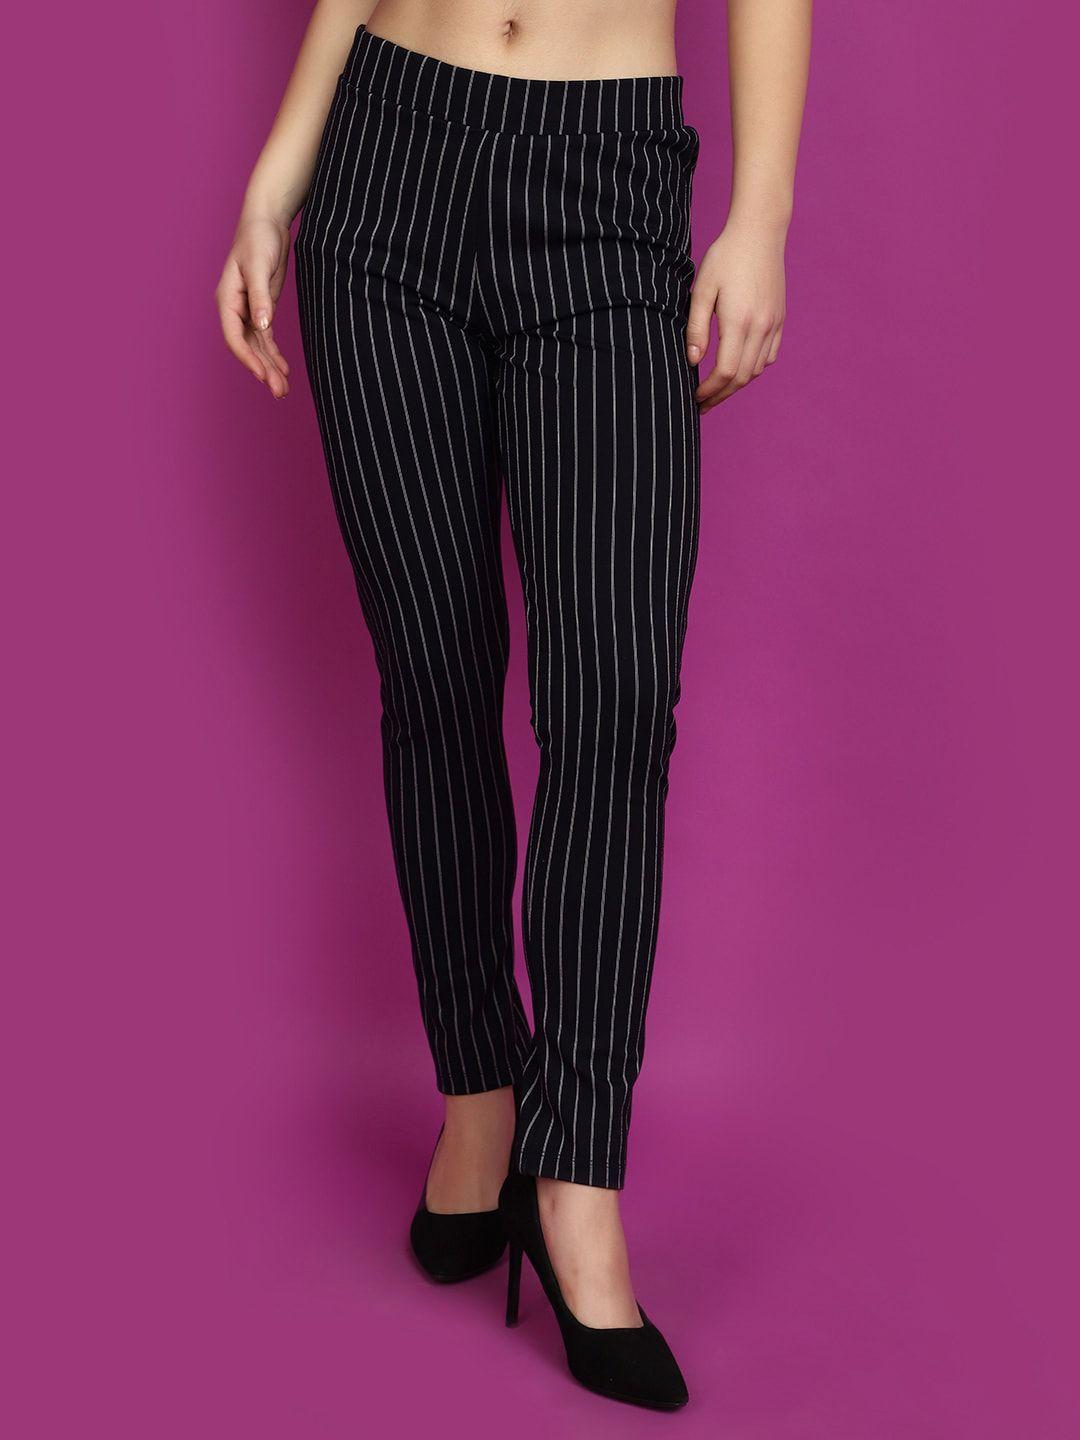 v-mart-women-slim-fit-striped-cotton-jeggings